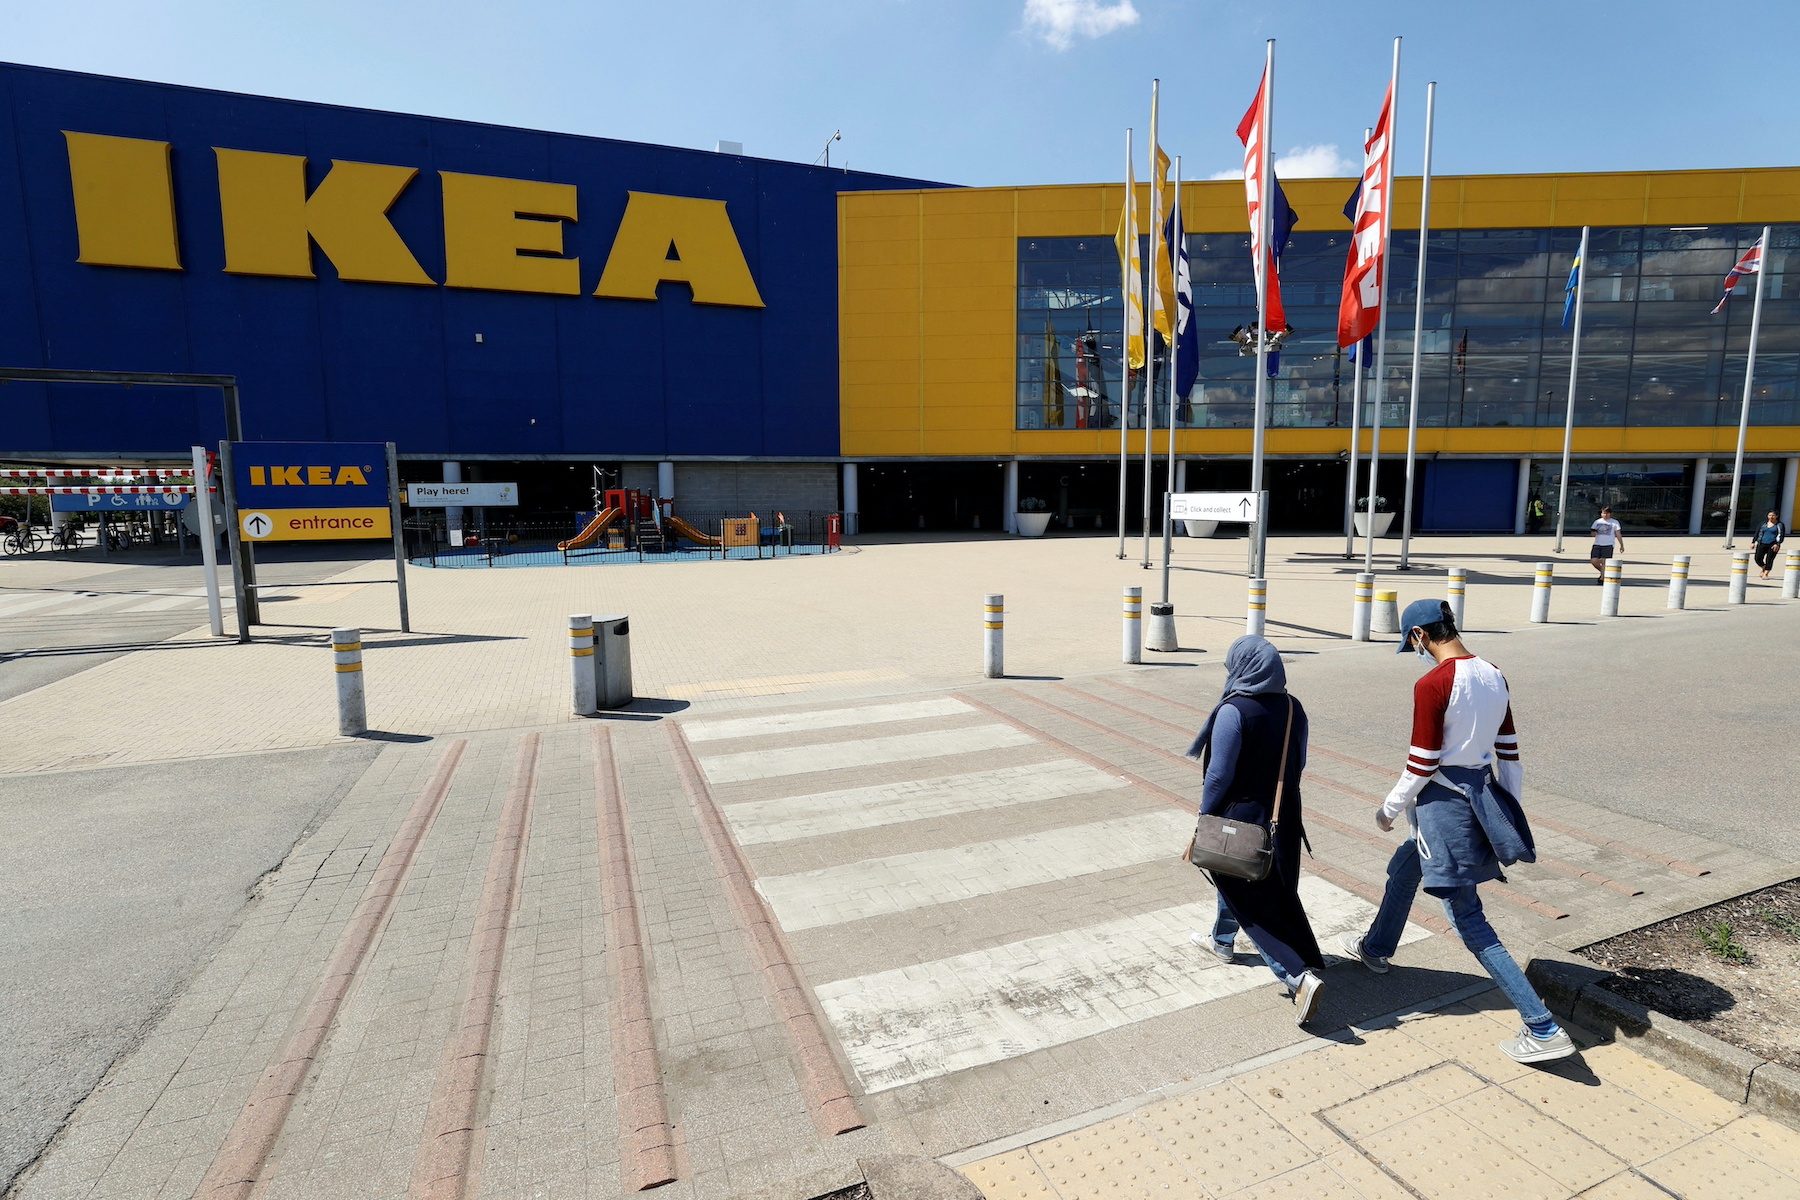 IKEA UK to close Tottenham store, 450 jobs impacted